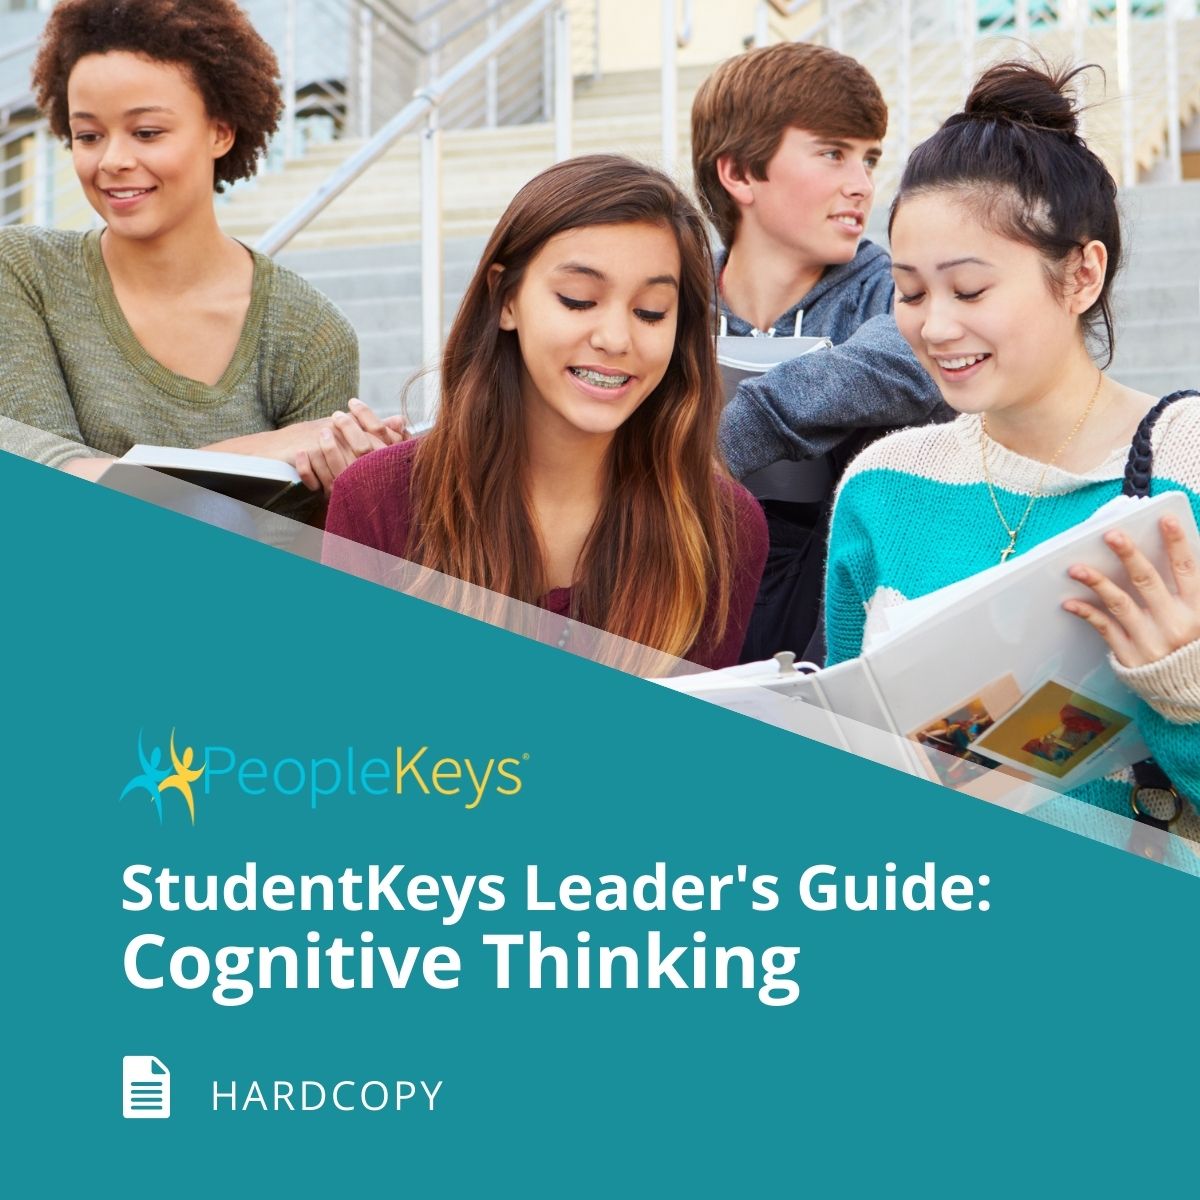 StudentKeys Leader’s Guide: Cognitive Thinking (Hardcopy)